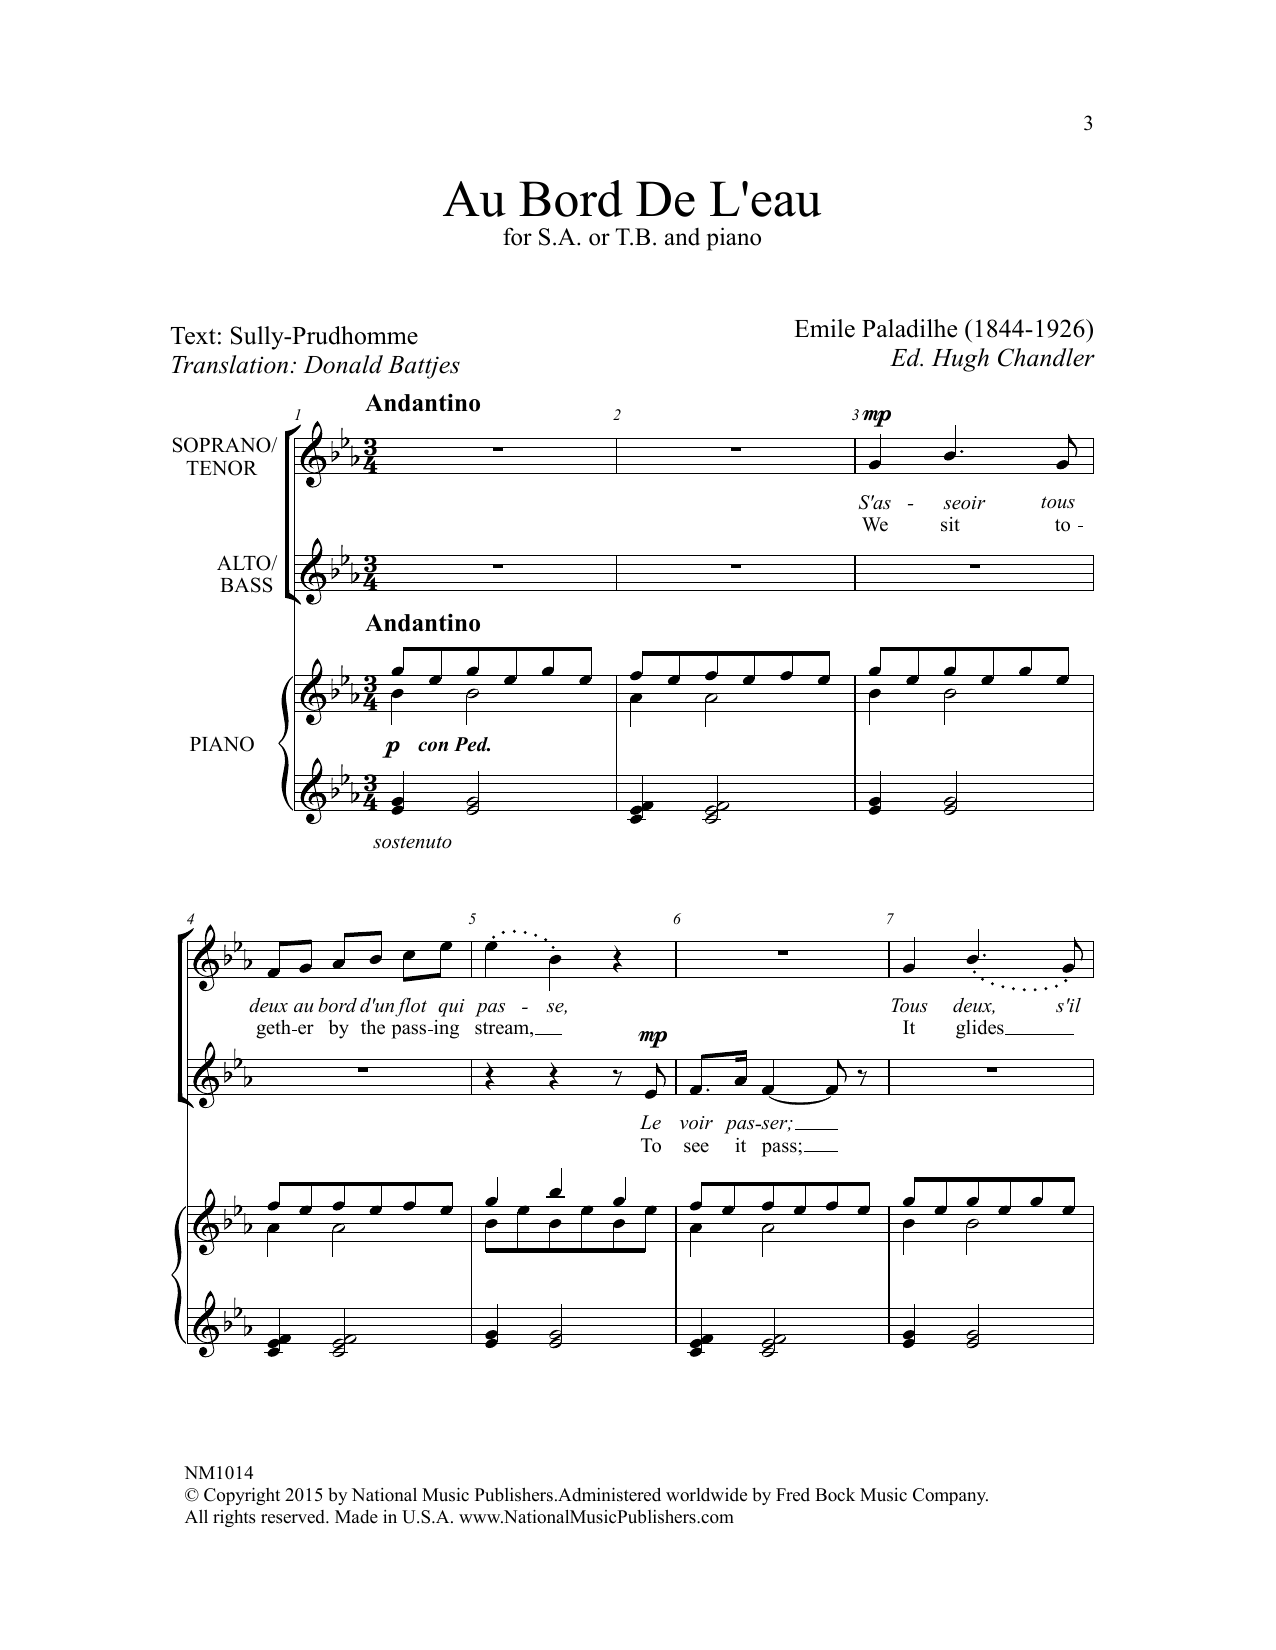 Emile Paladilhe Au Bord De L'eau (ed. Hugh Chandler) Sheet Music Notes & Chords for 2-Part Choir - Download or Print PDF